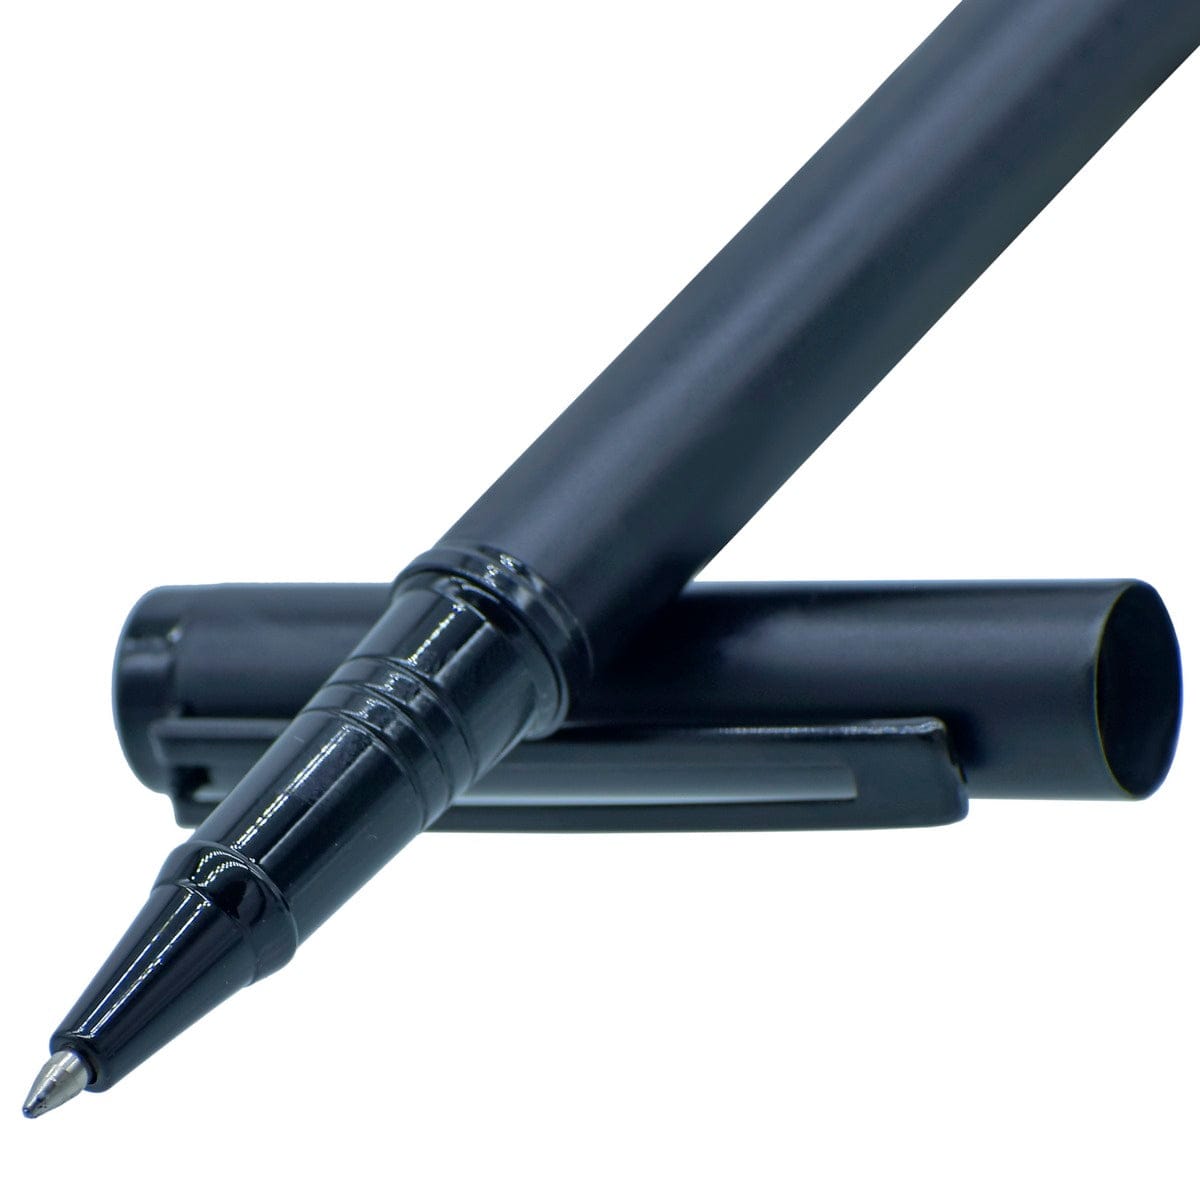 jags-mumbai Roller Pens Roller Pen Black